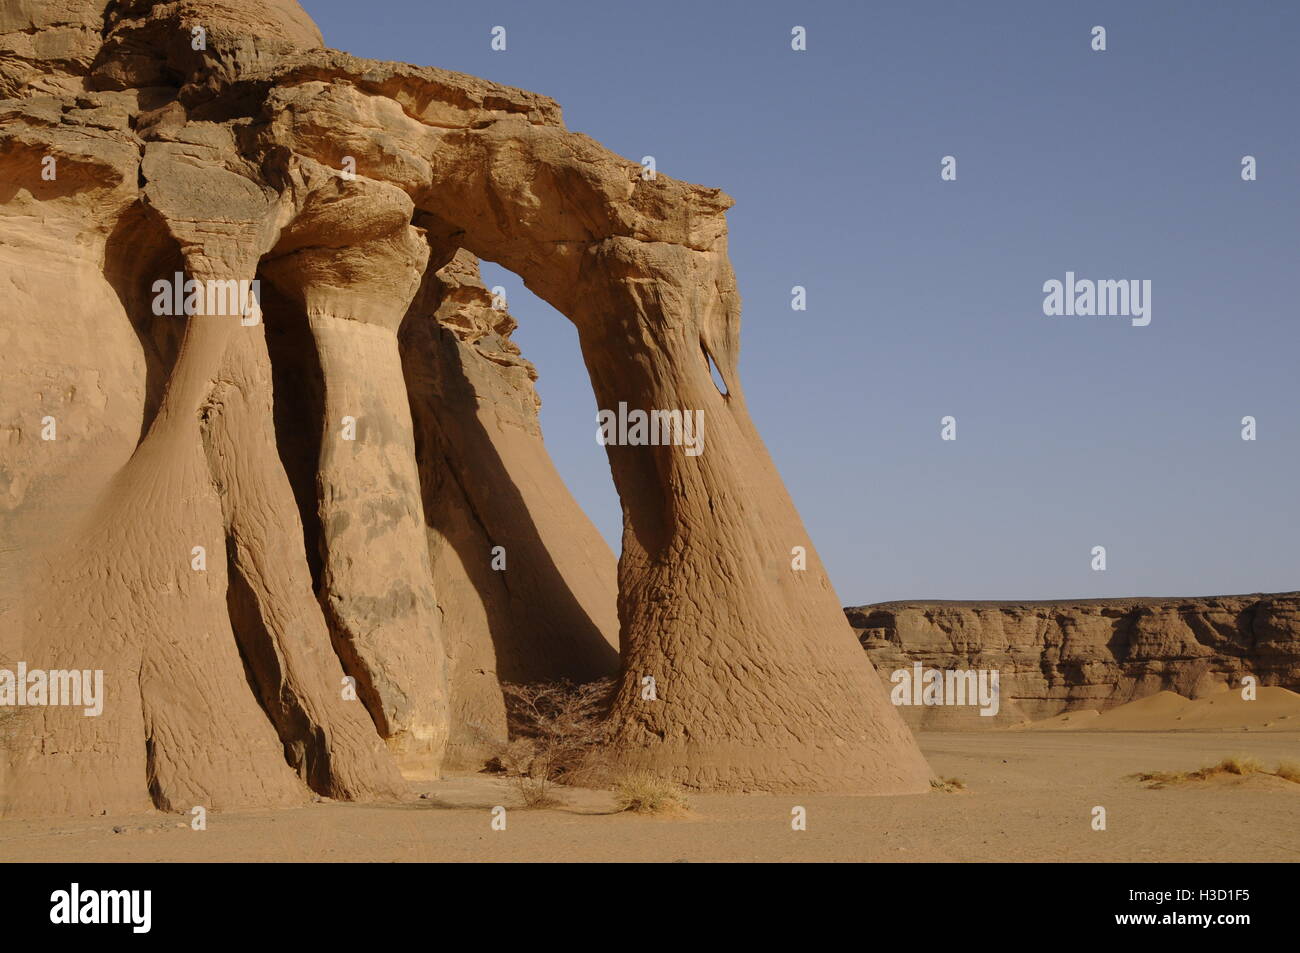 The incredible rock formation Tinhaliga Arch, Acacus Mountains, Sahara Desert, Libya Stock Photo